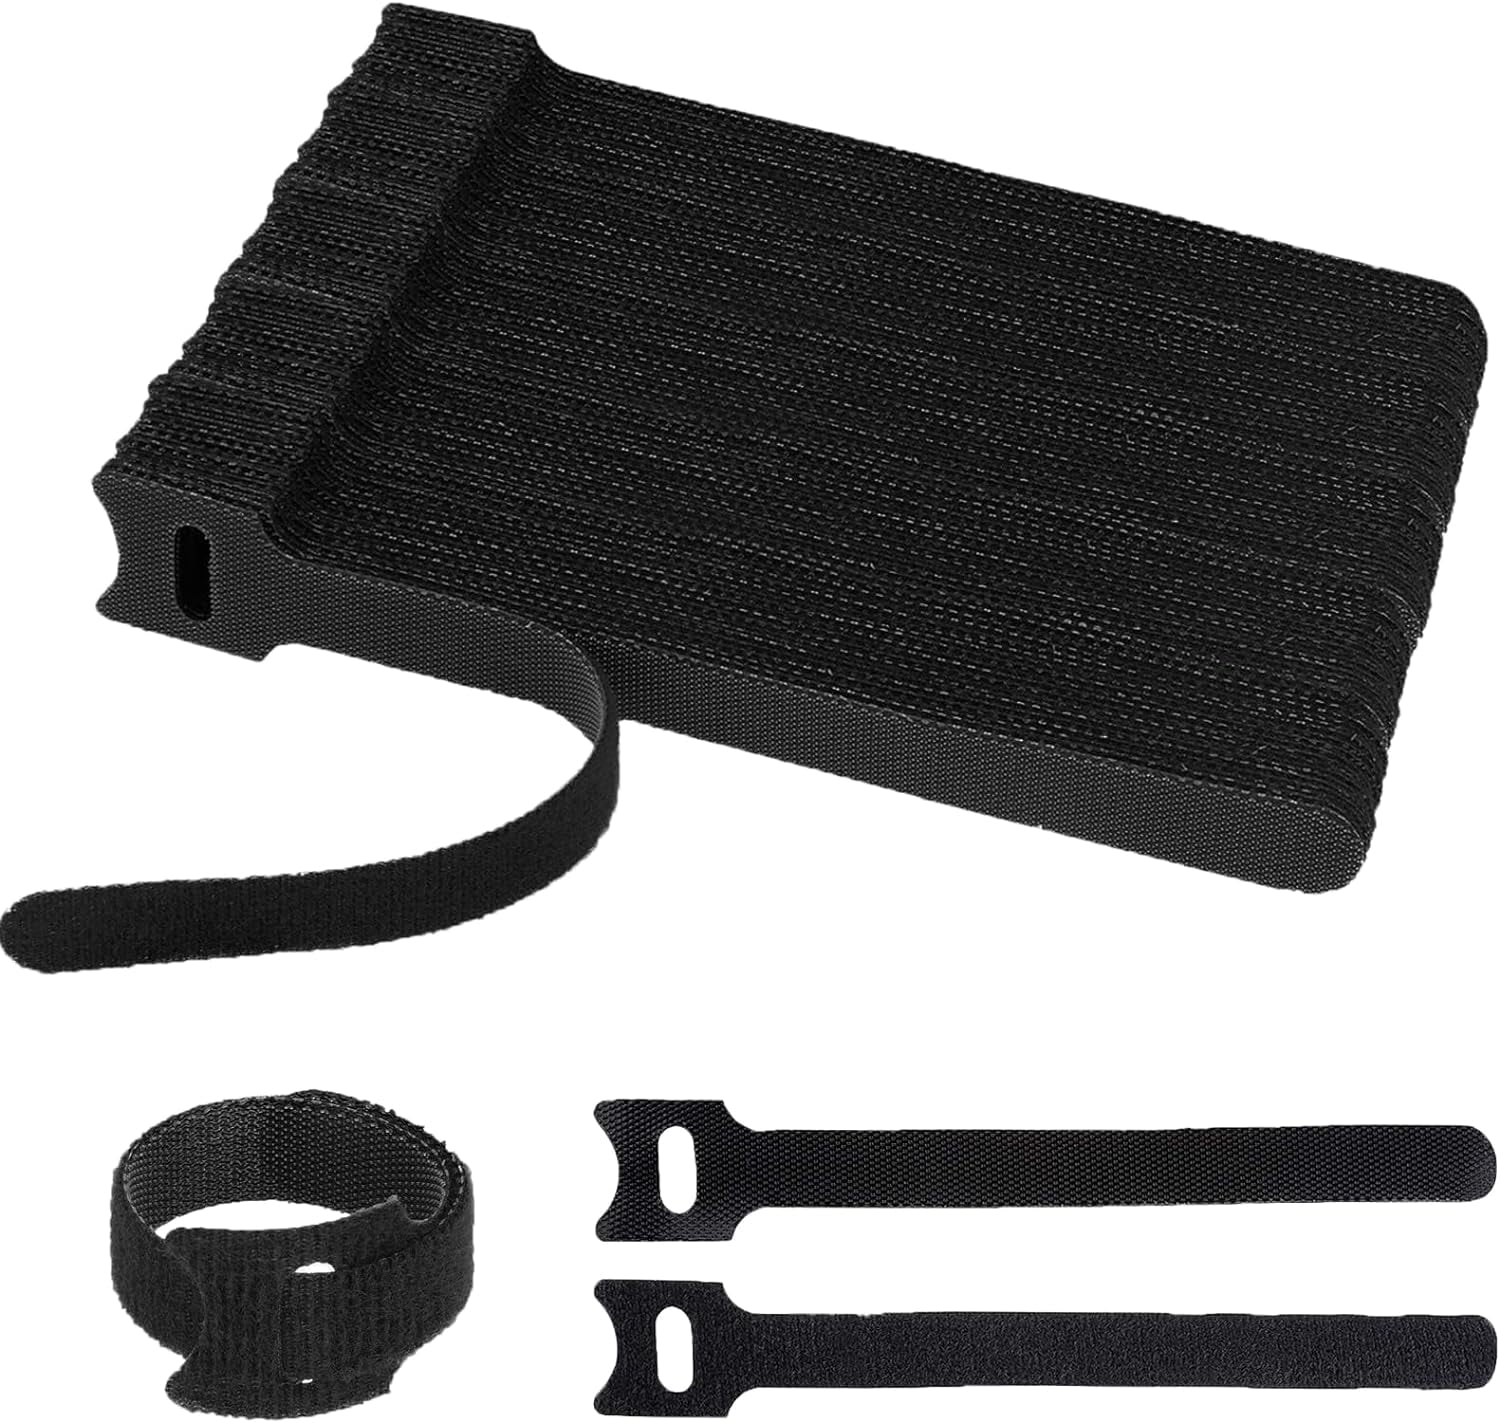 100Pcs Velcro Cable Ties - Reusable Cable Tie, Black Adjustable